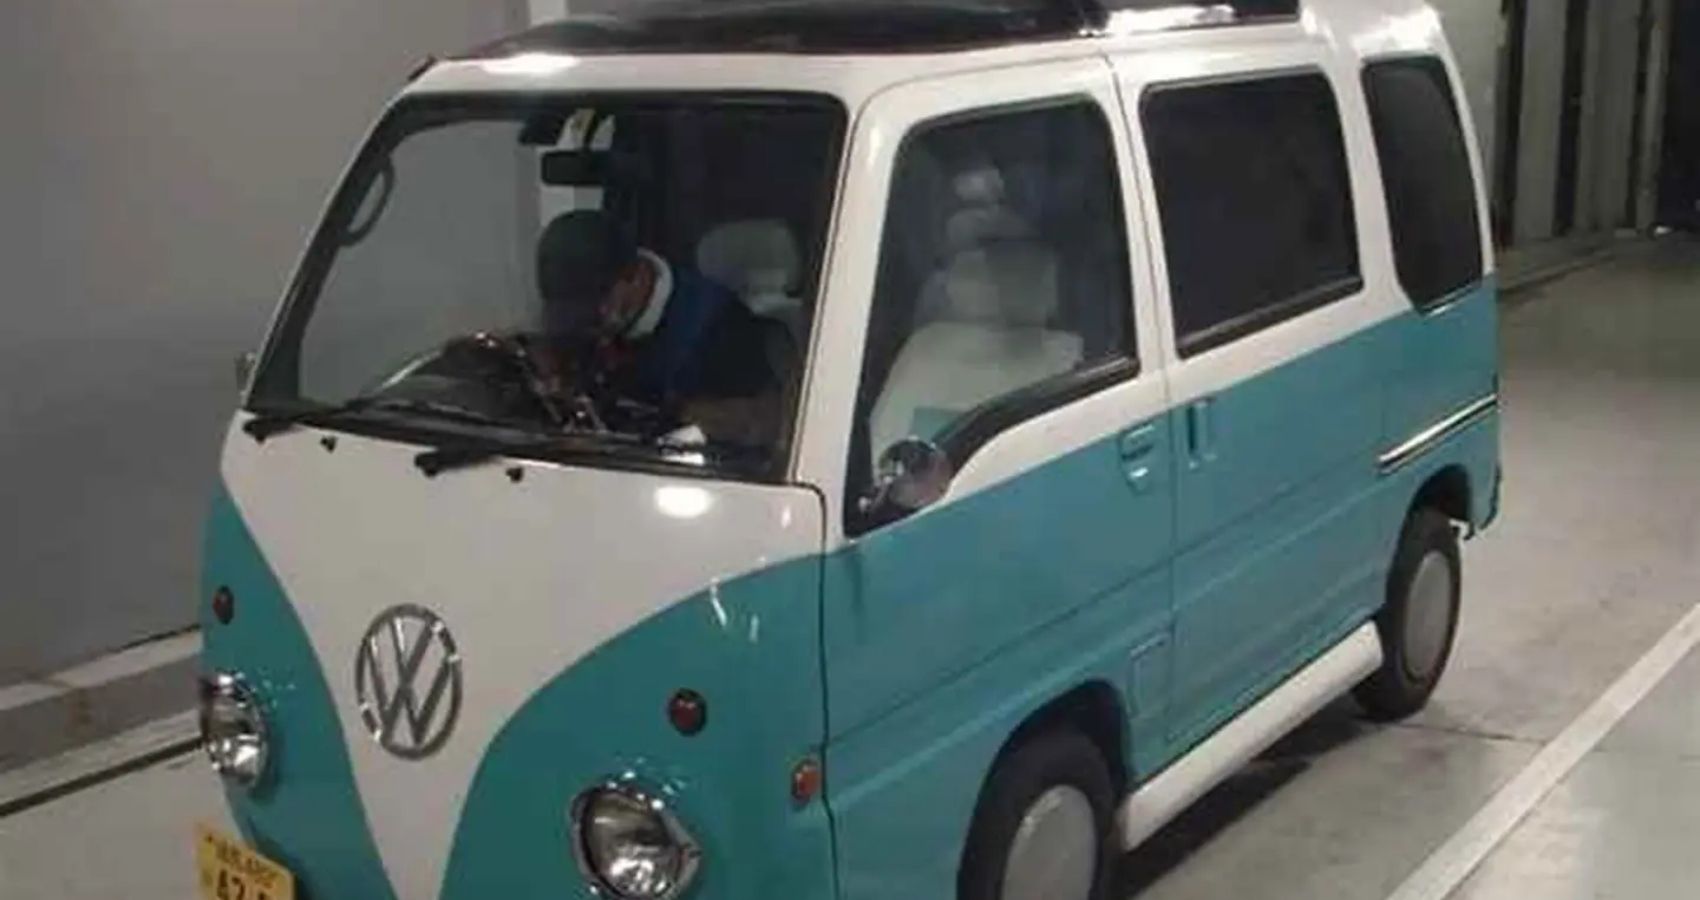 VW Microbus look -a -like